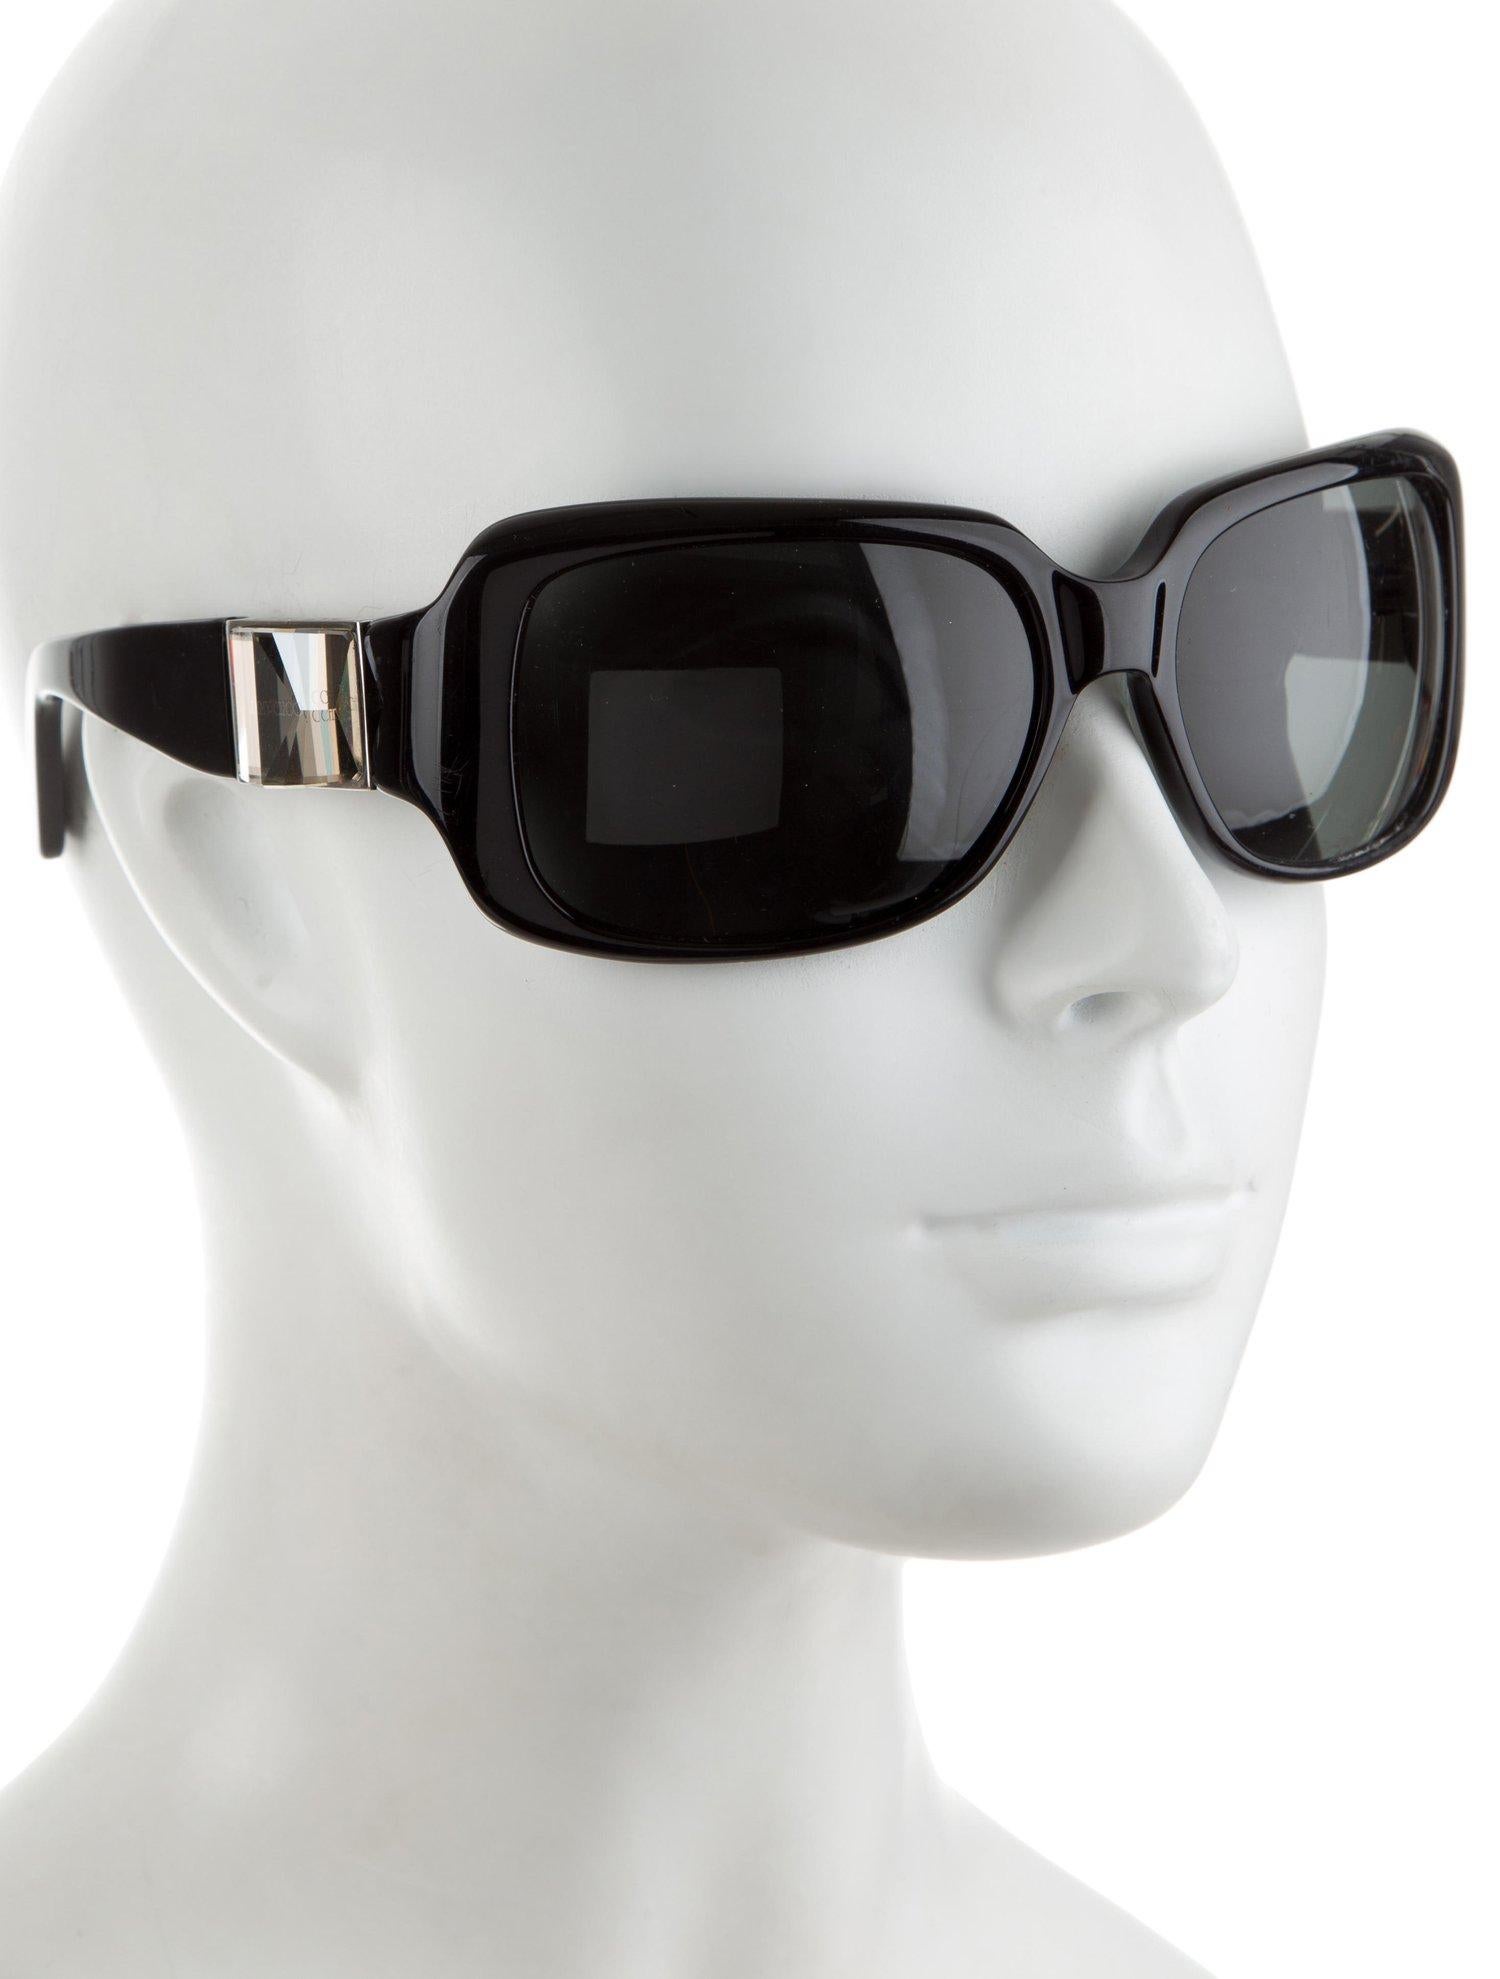 New Jimmy Choo Swarovski Sunglasses With Case & Box $595 1